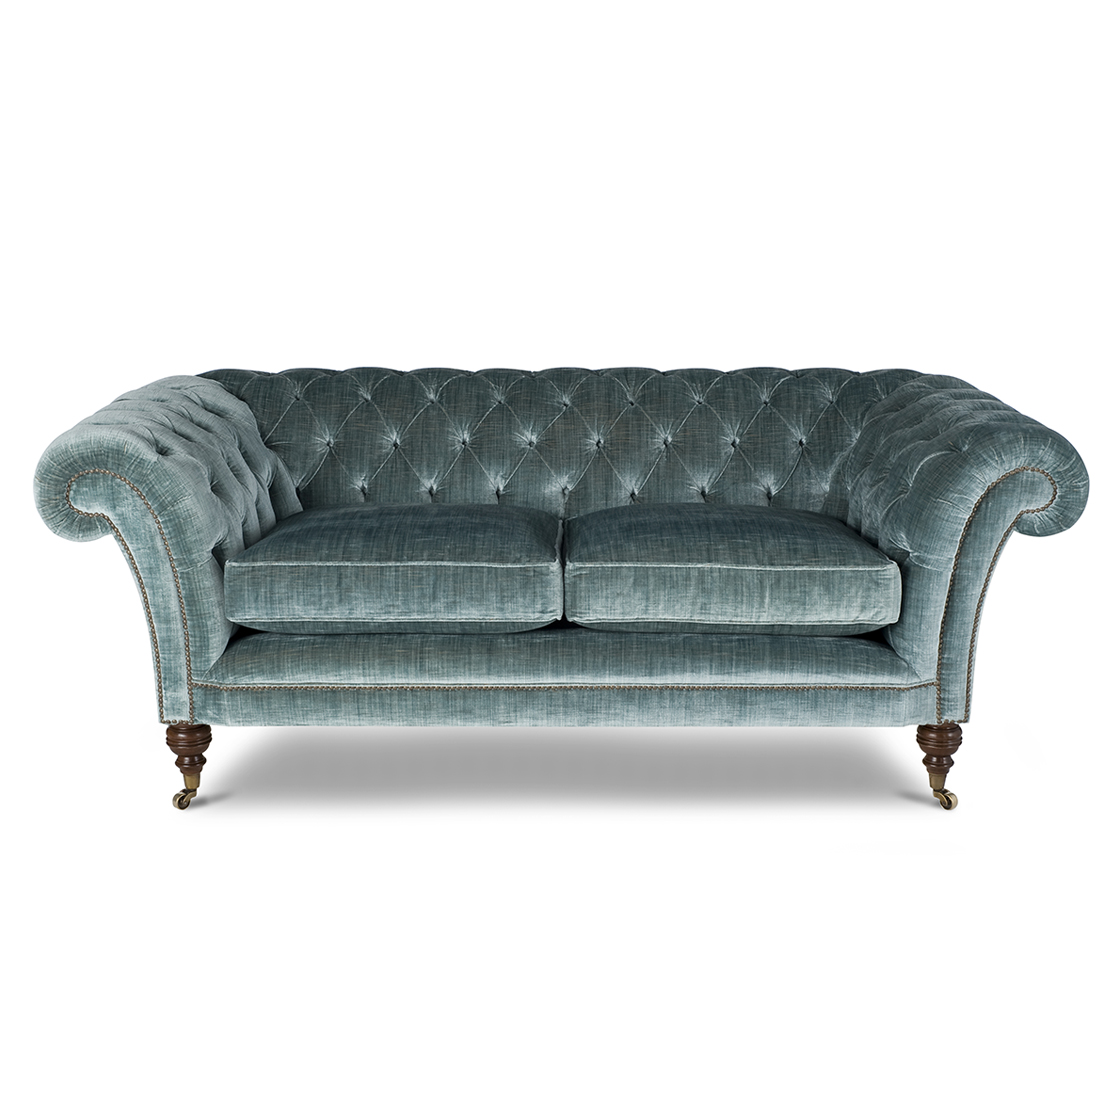 Grenville sofa in Como silk velvet-Teal - Beaumont & Fletcher